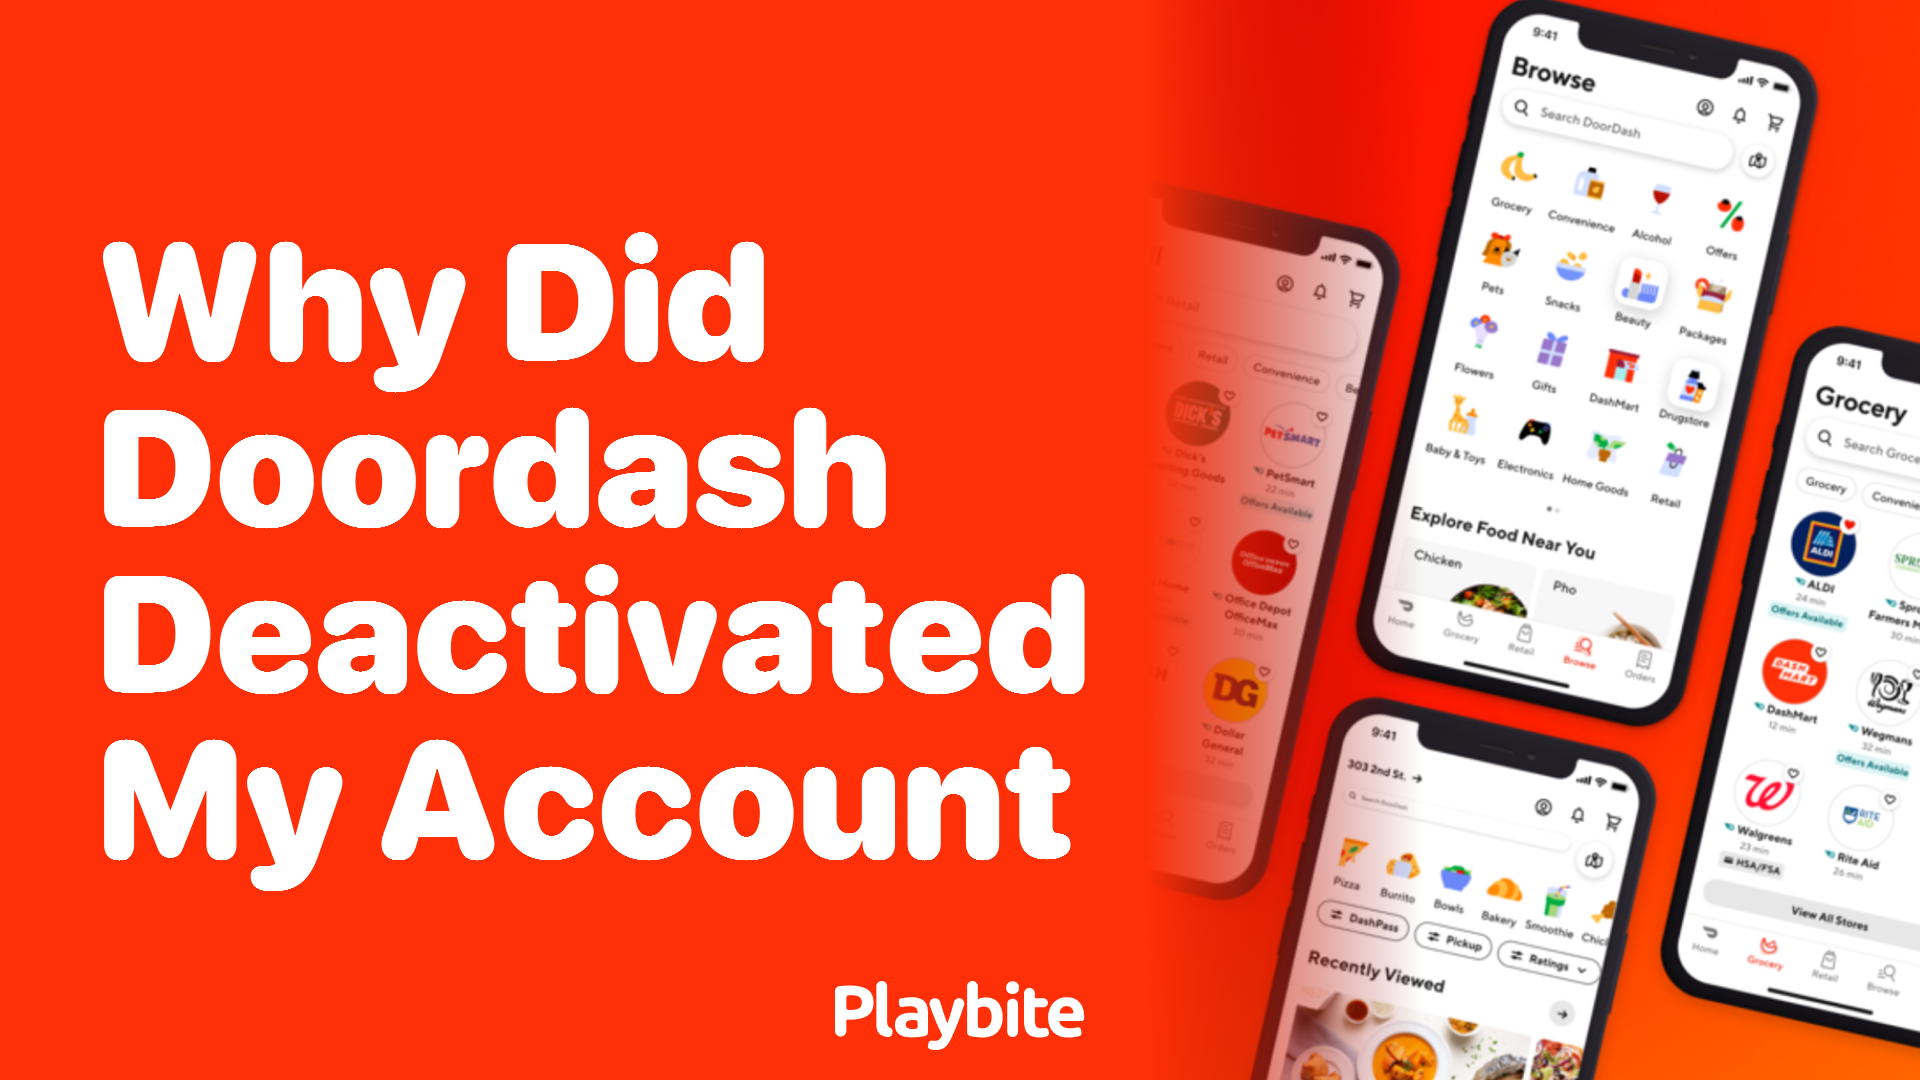 Why Did DoorDash Deactivate My Account? Understanding Account Issues